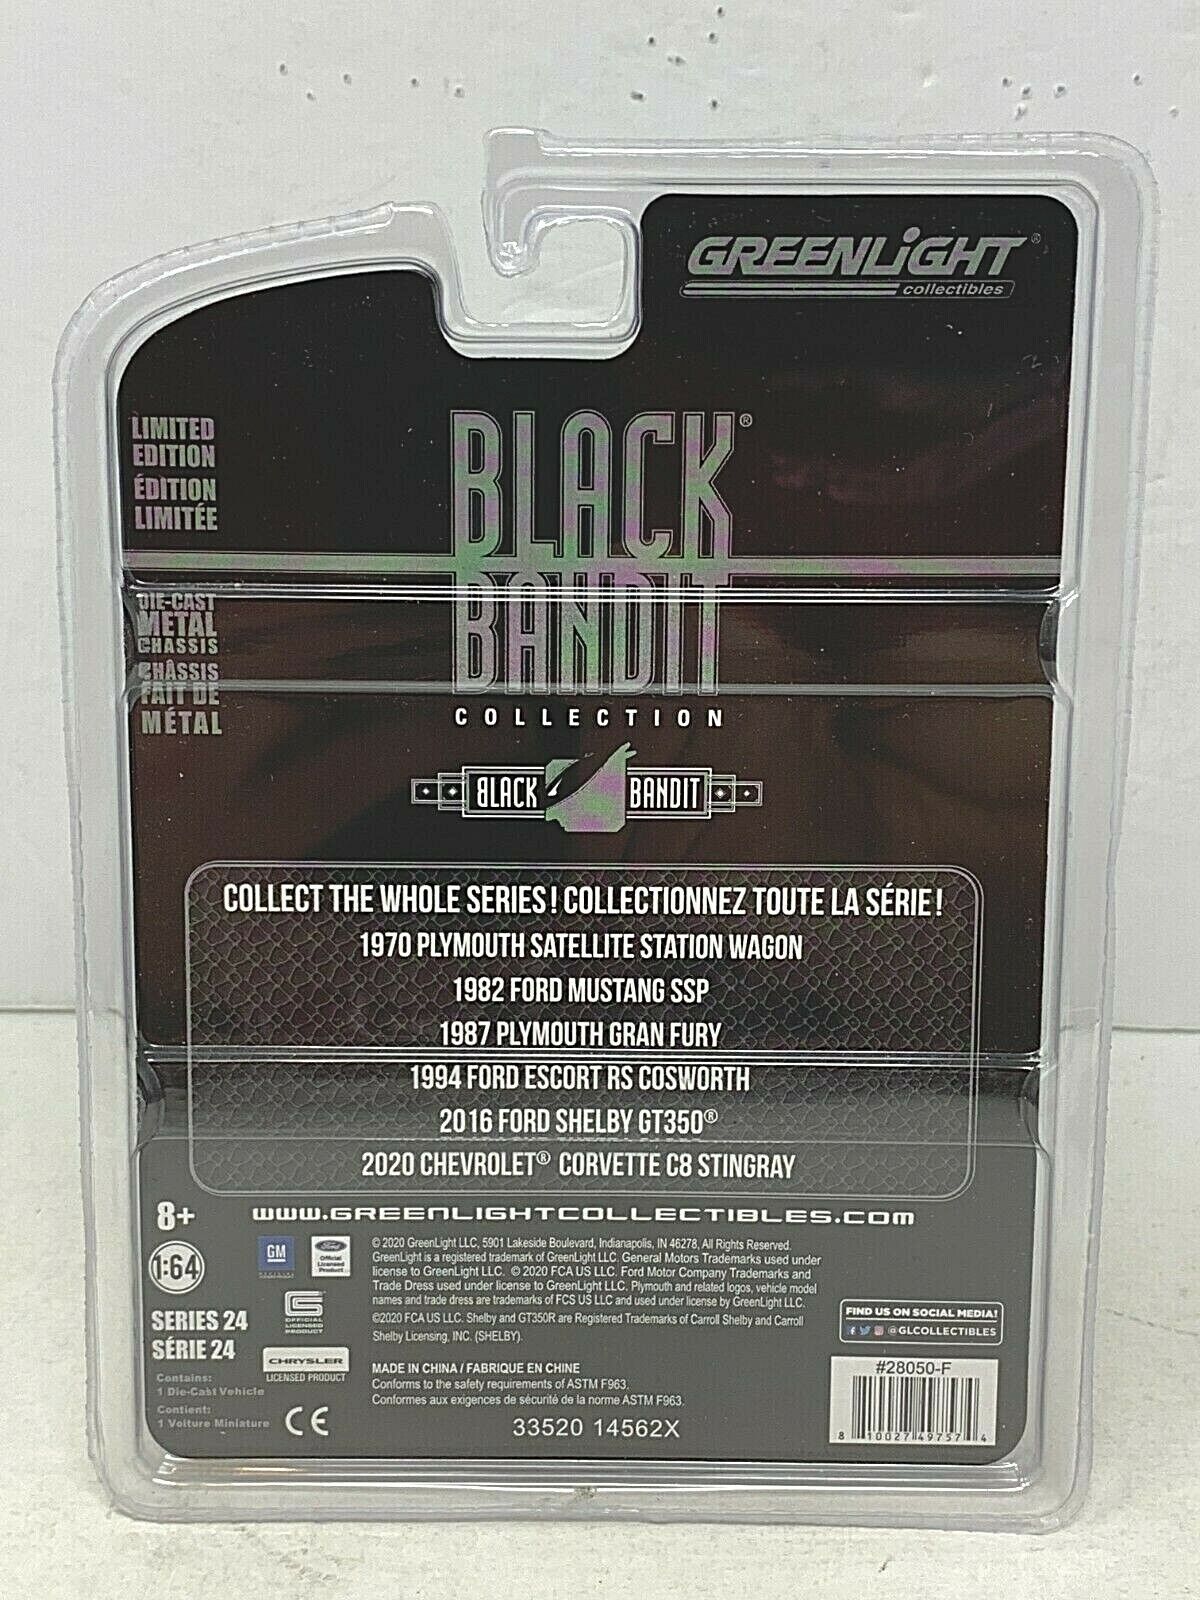 Greenlight Black Bandit Series 24 2020 Chevy Corvette C8 Stingray 1:64 Diecast